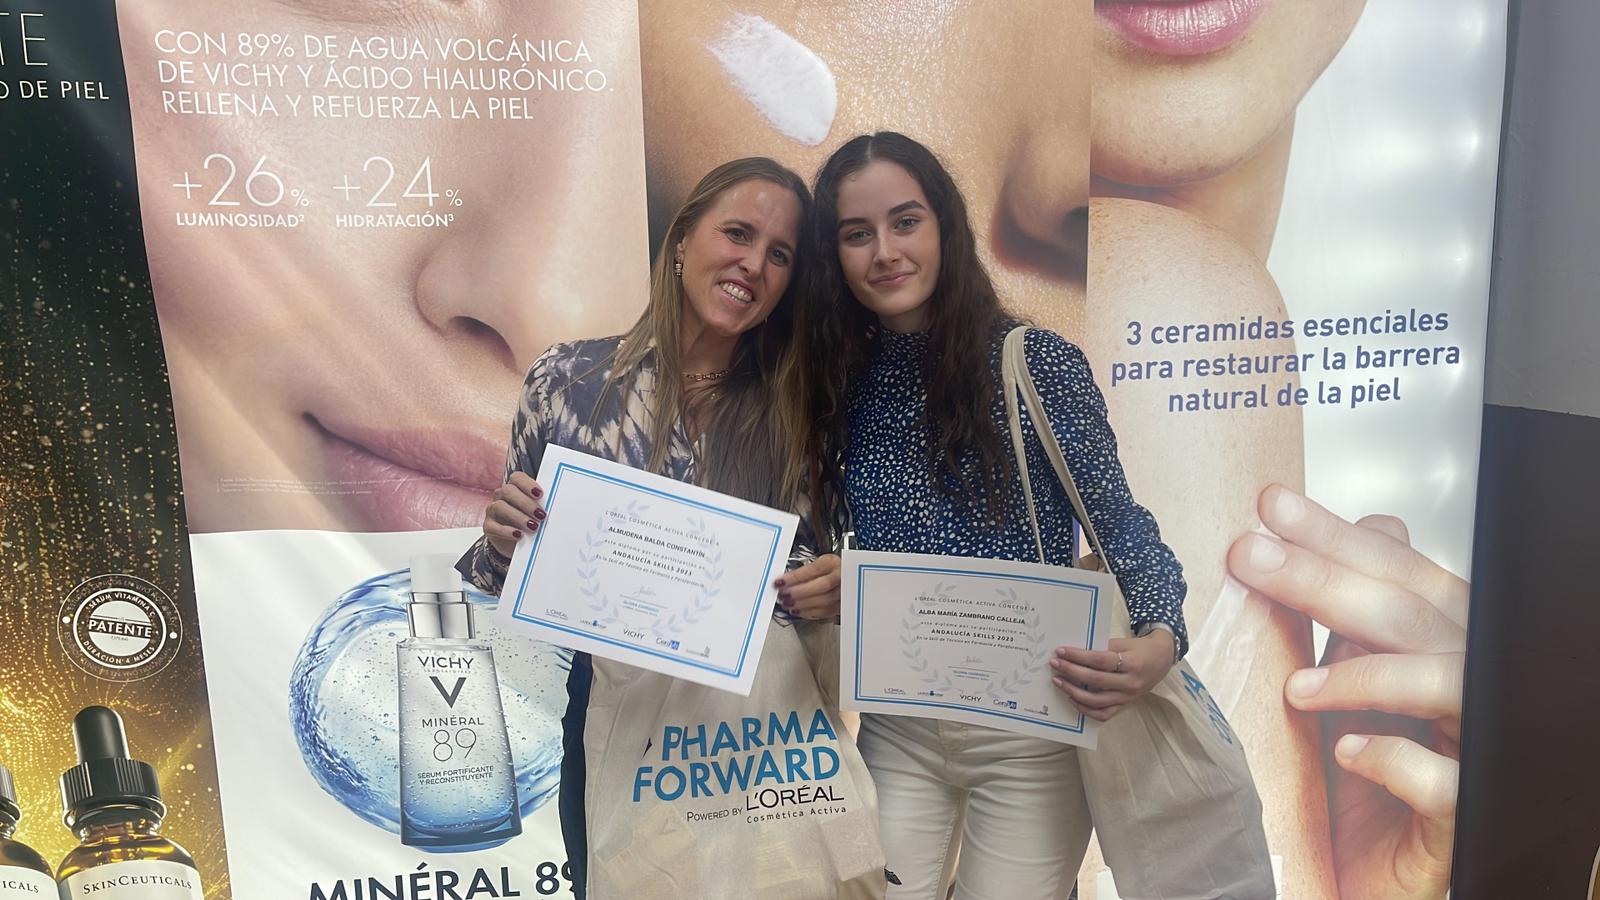 Ribamar-Loreal Dermatological Beauty-skills-andalucia-ganadores-farmacia-parafarmacia